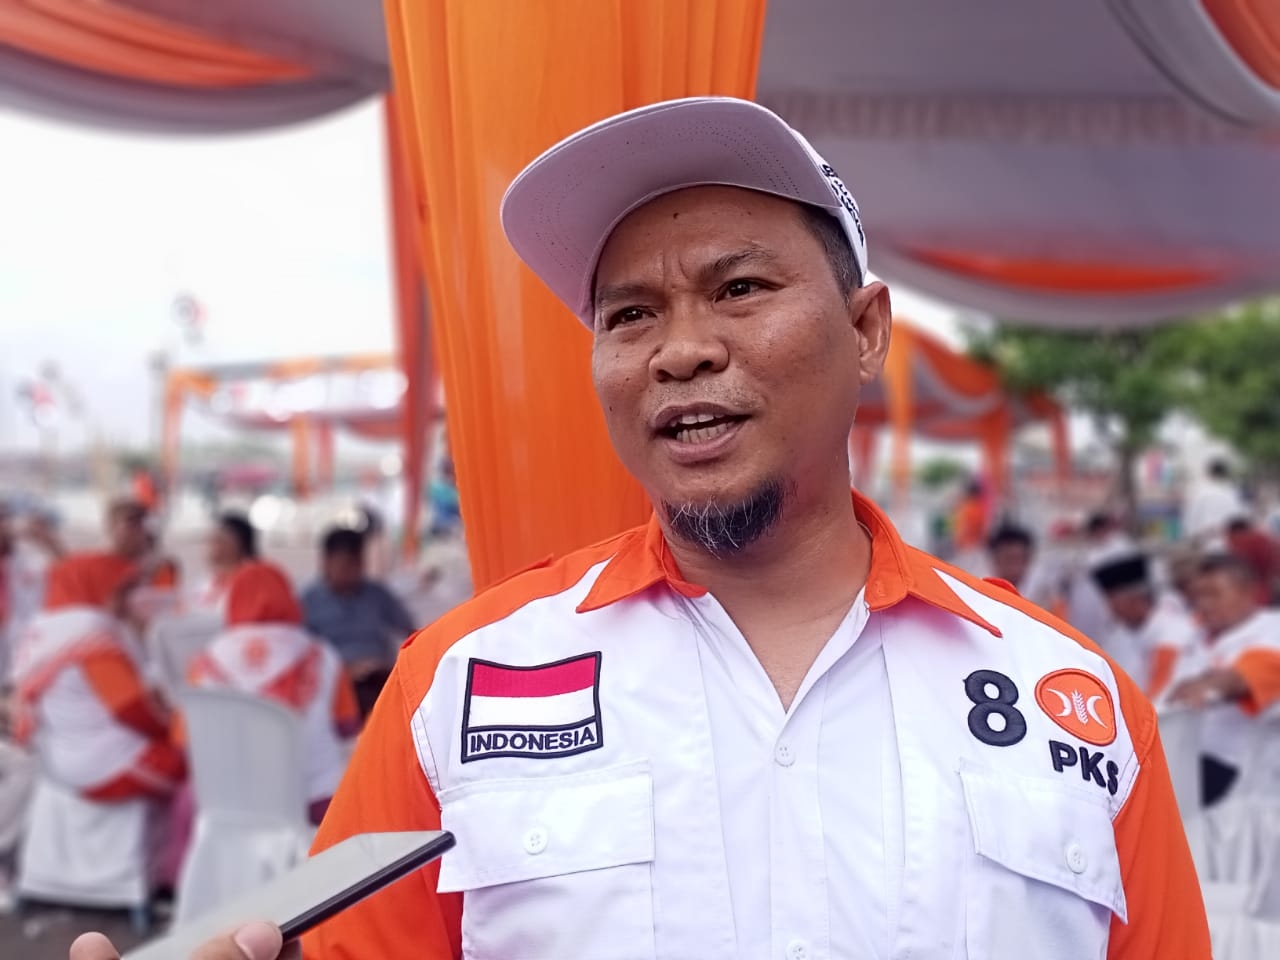 PKS Palembang Usung Baharudin Sebagai Cawako, Target 15 Persen Kursi di DPR RI